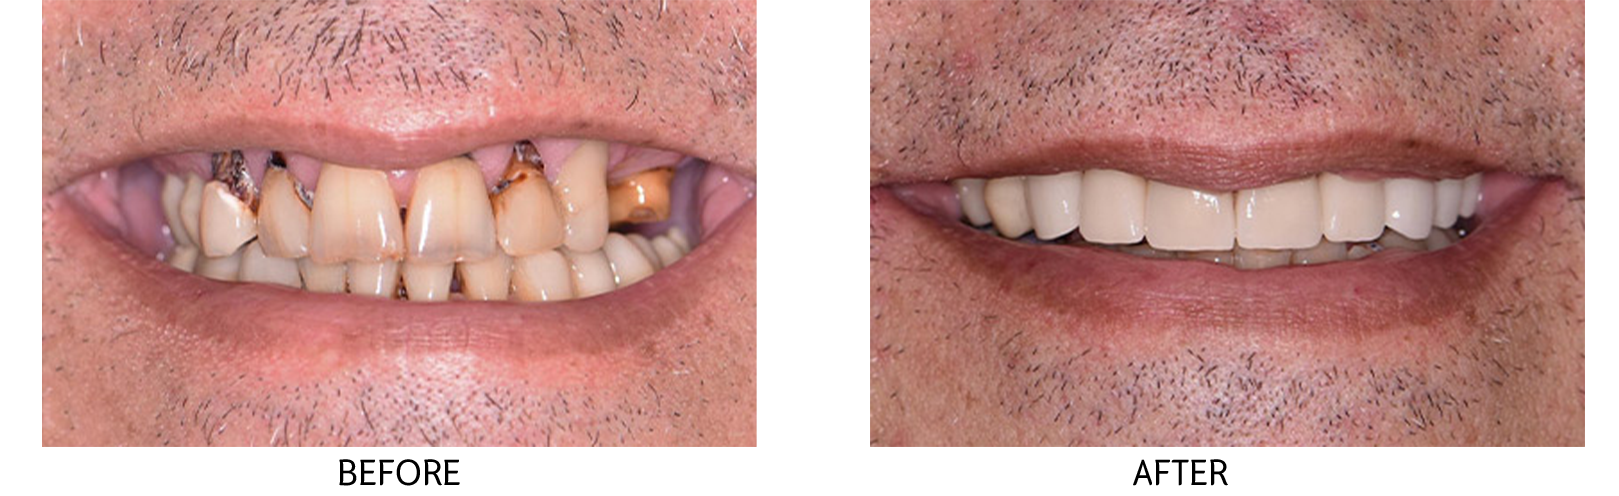 Dental Implants, Full Mouth Dental Implants, All